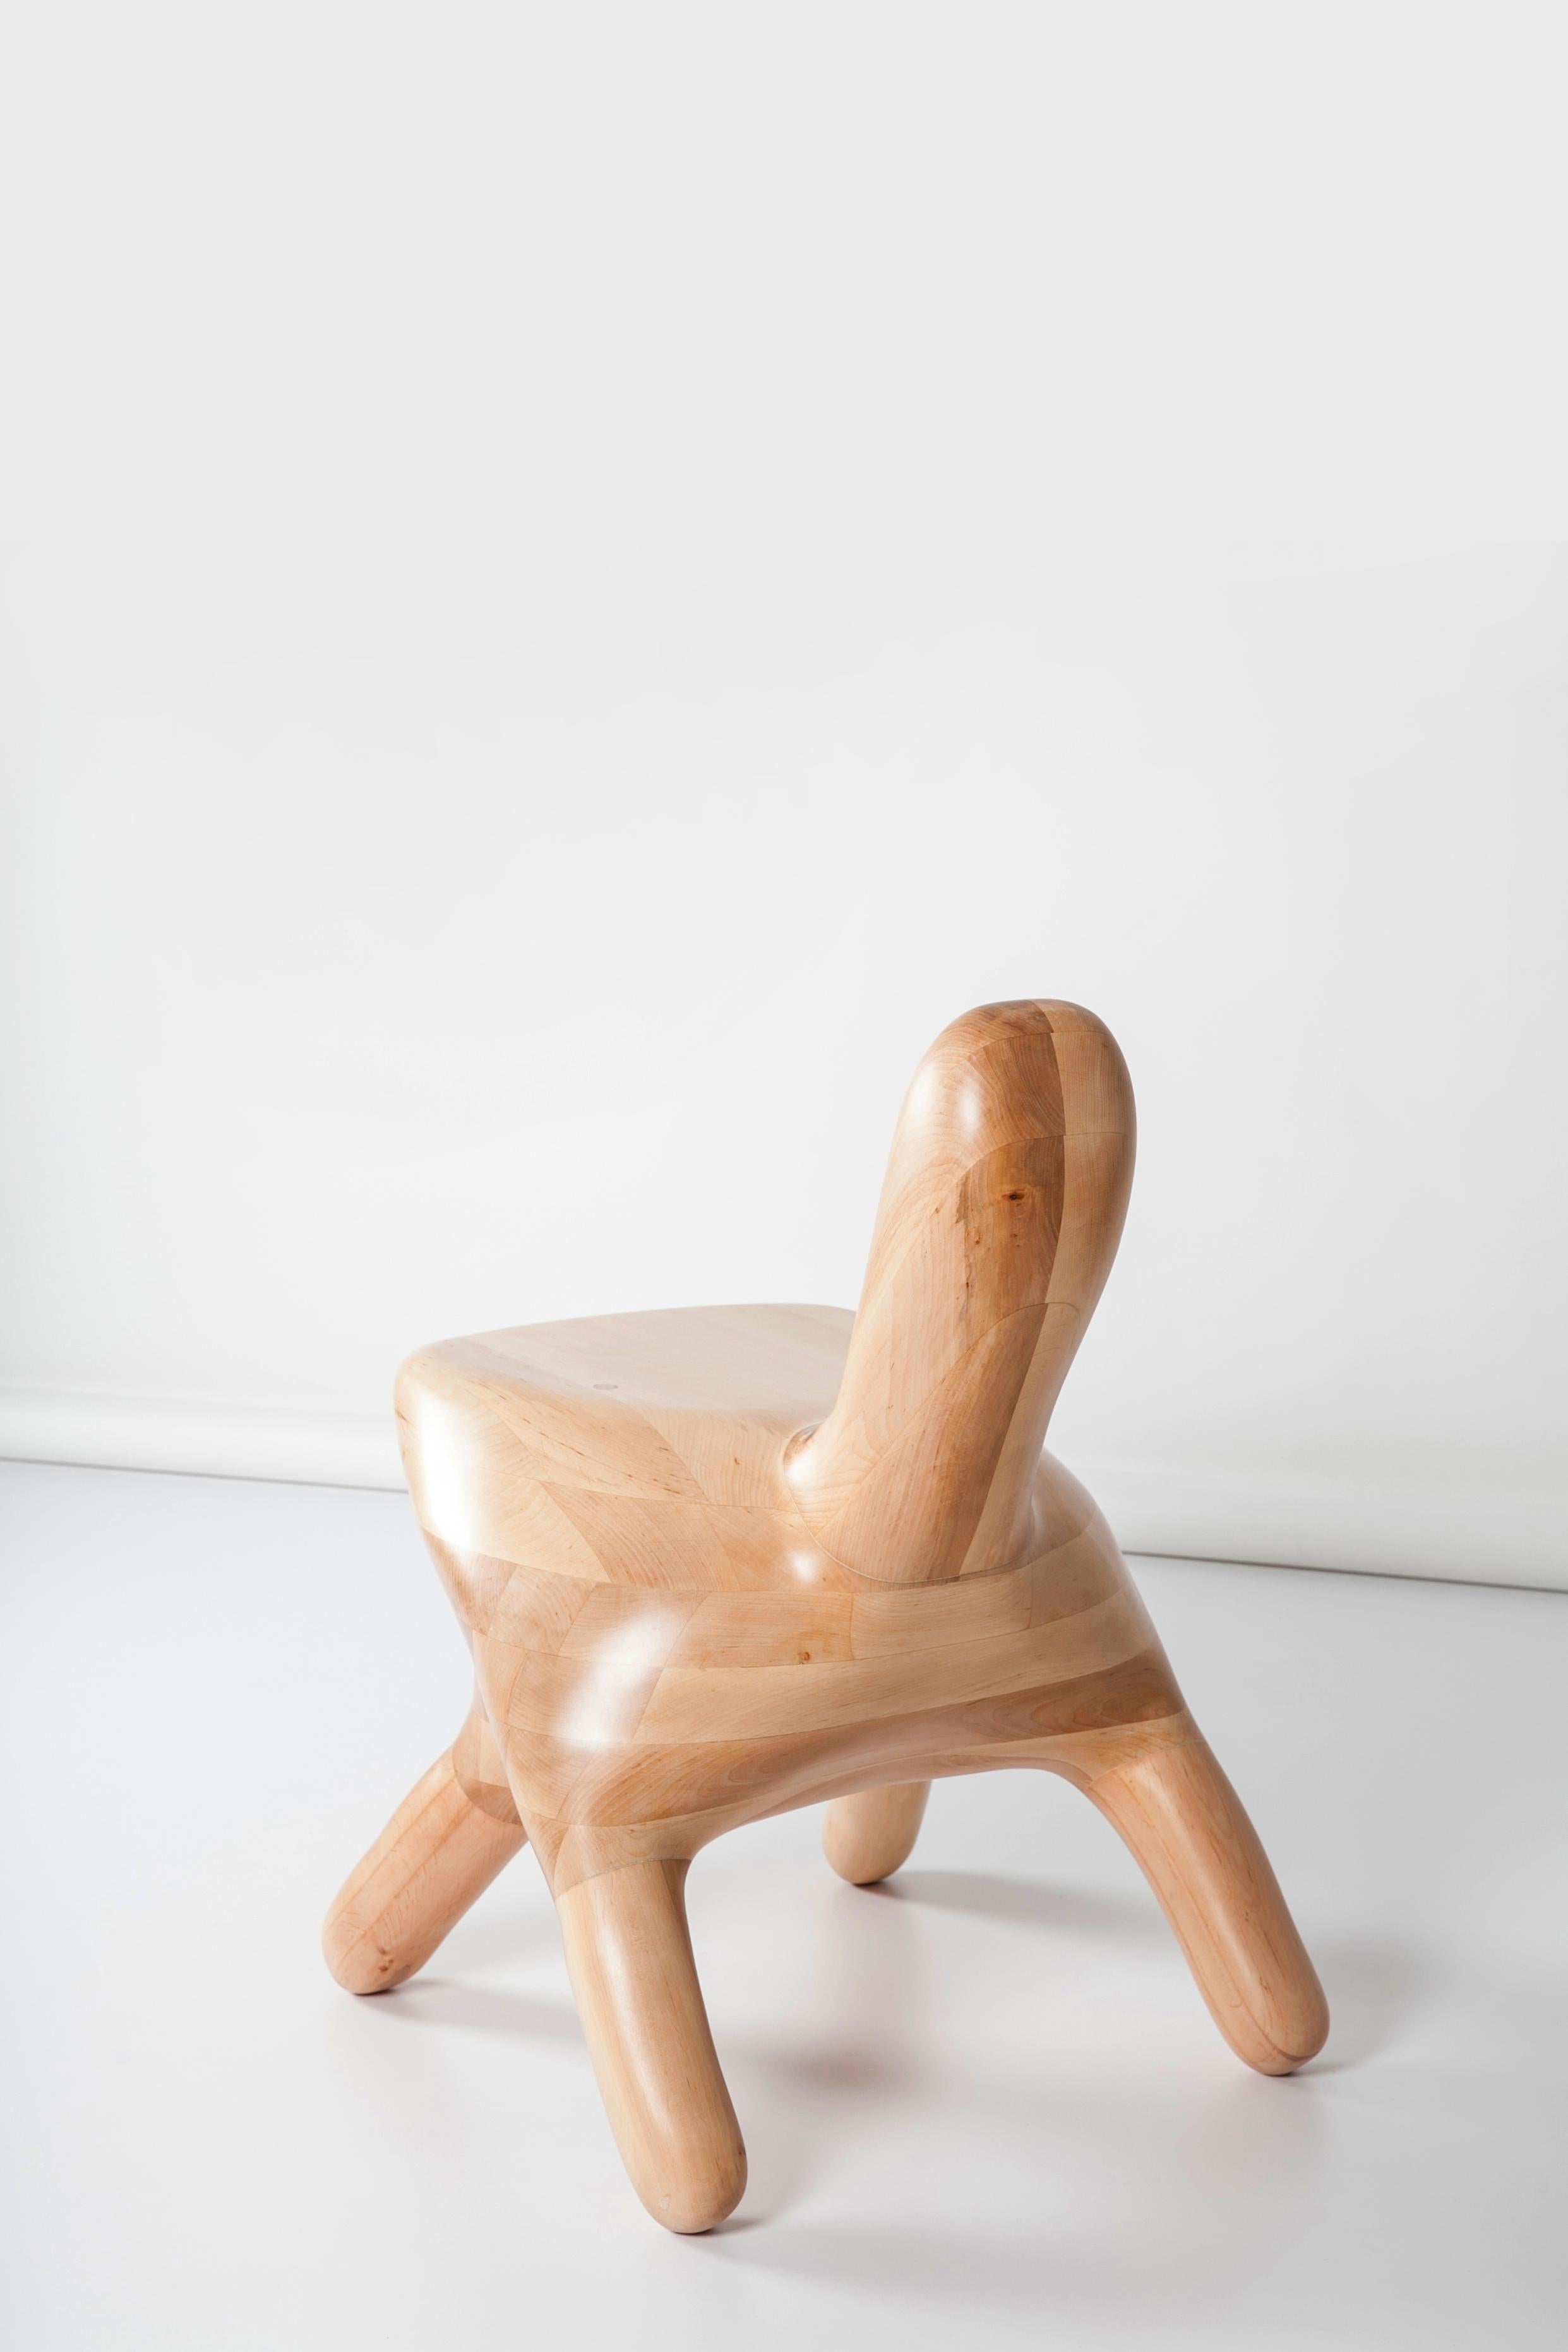 Other Anna Bera Shape N2 Chair by Nów